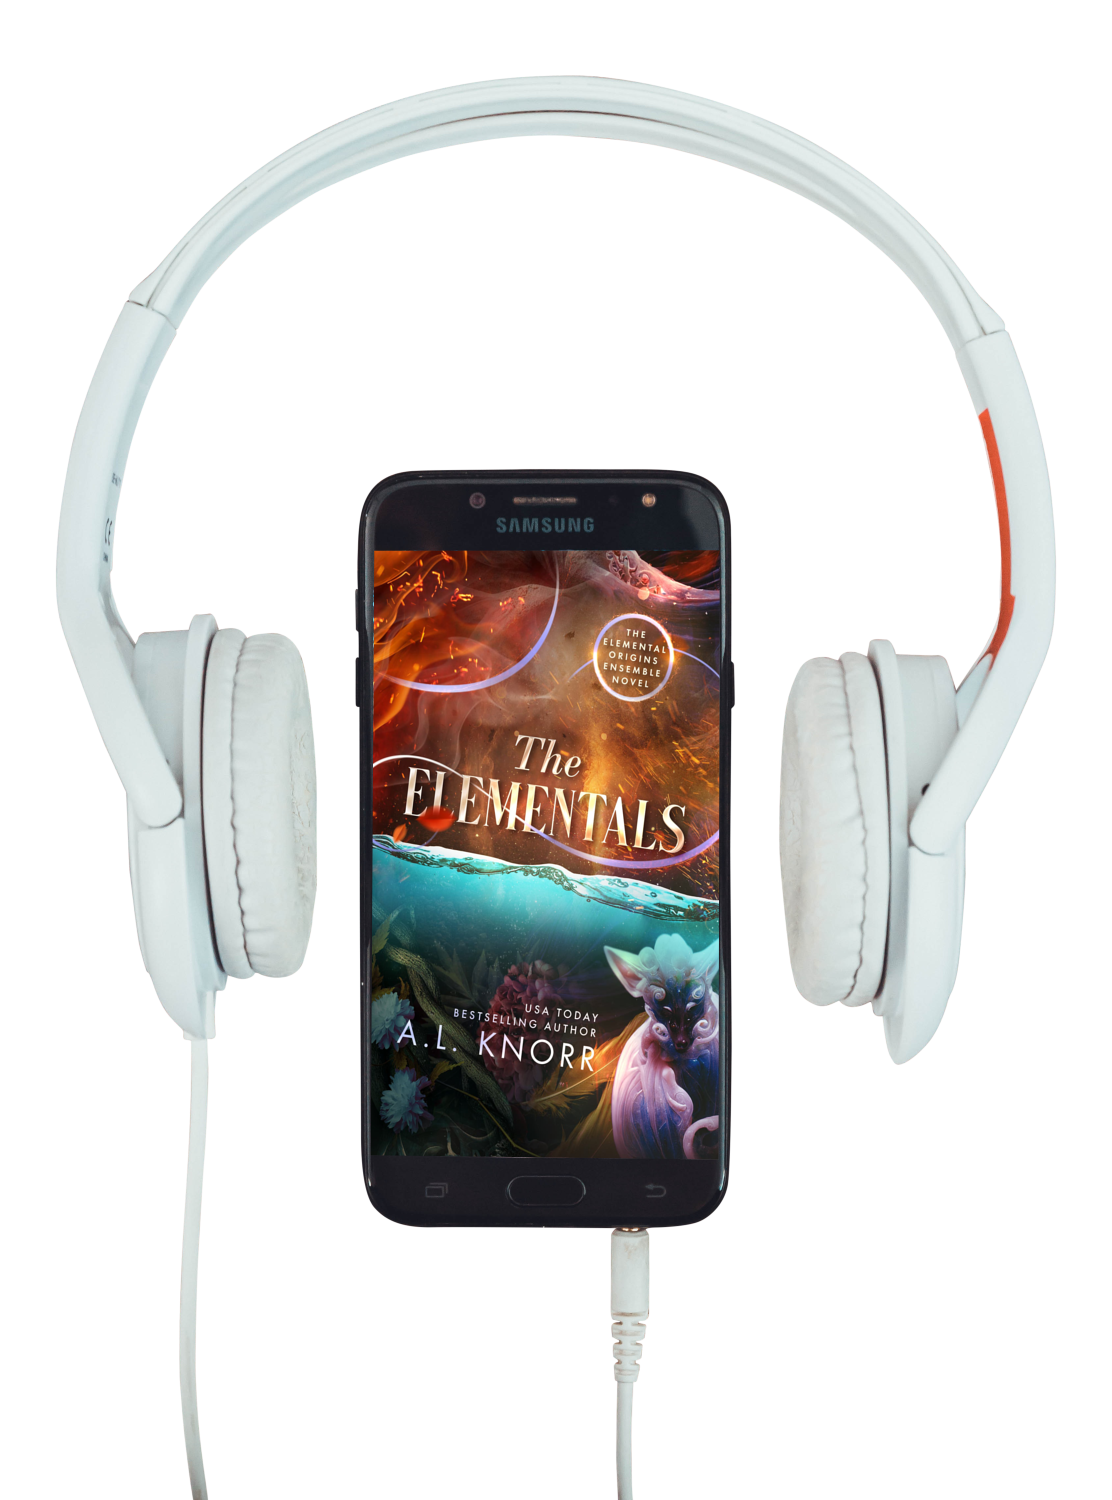 The Elementals Audiobook graphic with headphones